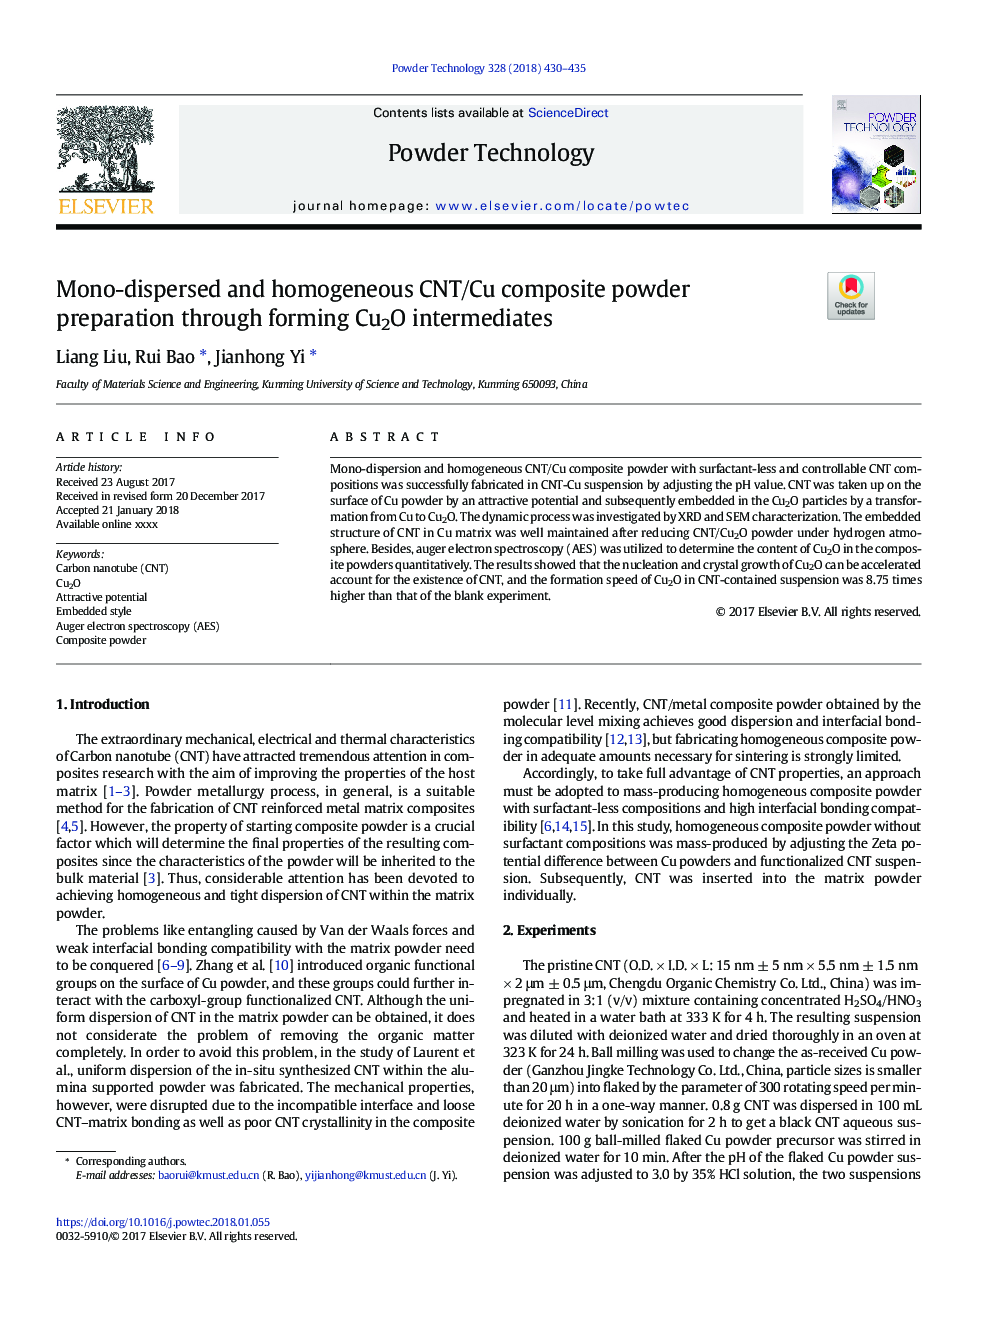 Mono-dispersed and homogeneous CNT/Cu composite powder preparation through forming Cu2O intermediates